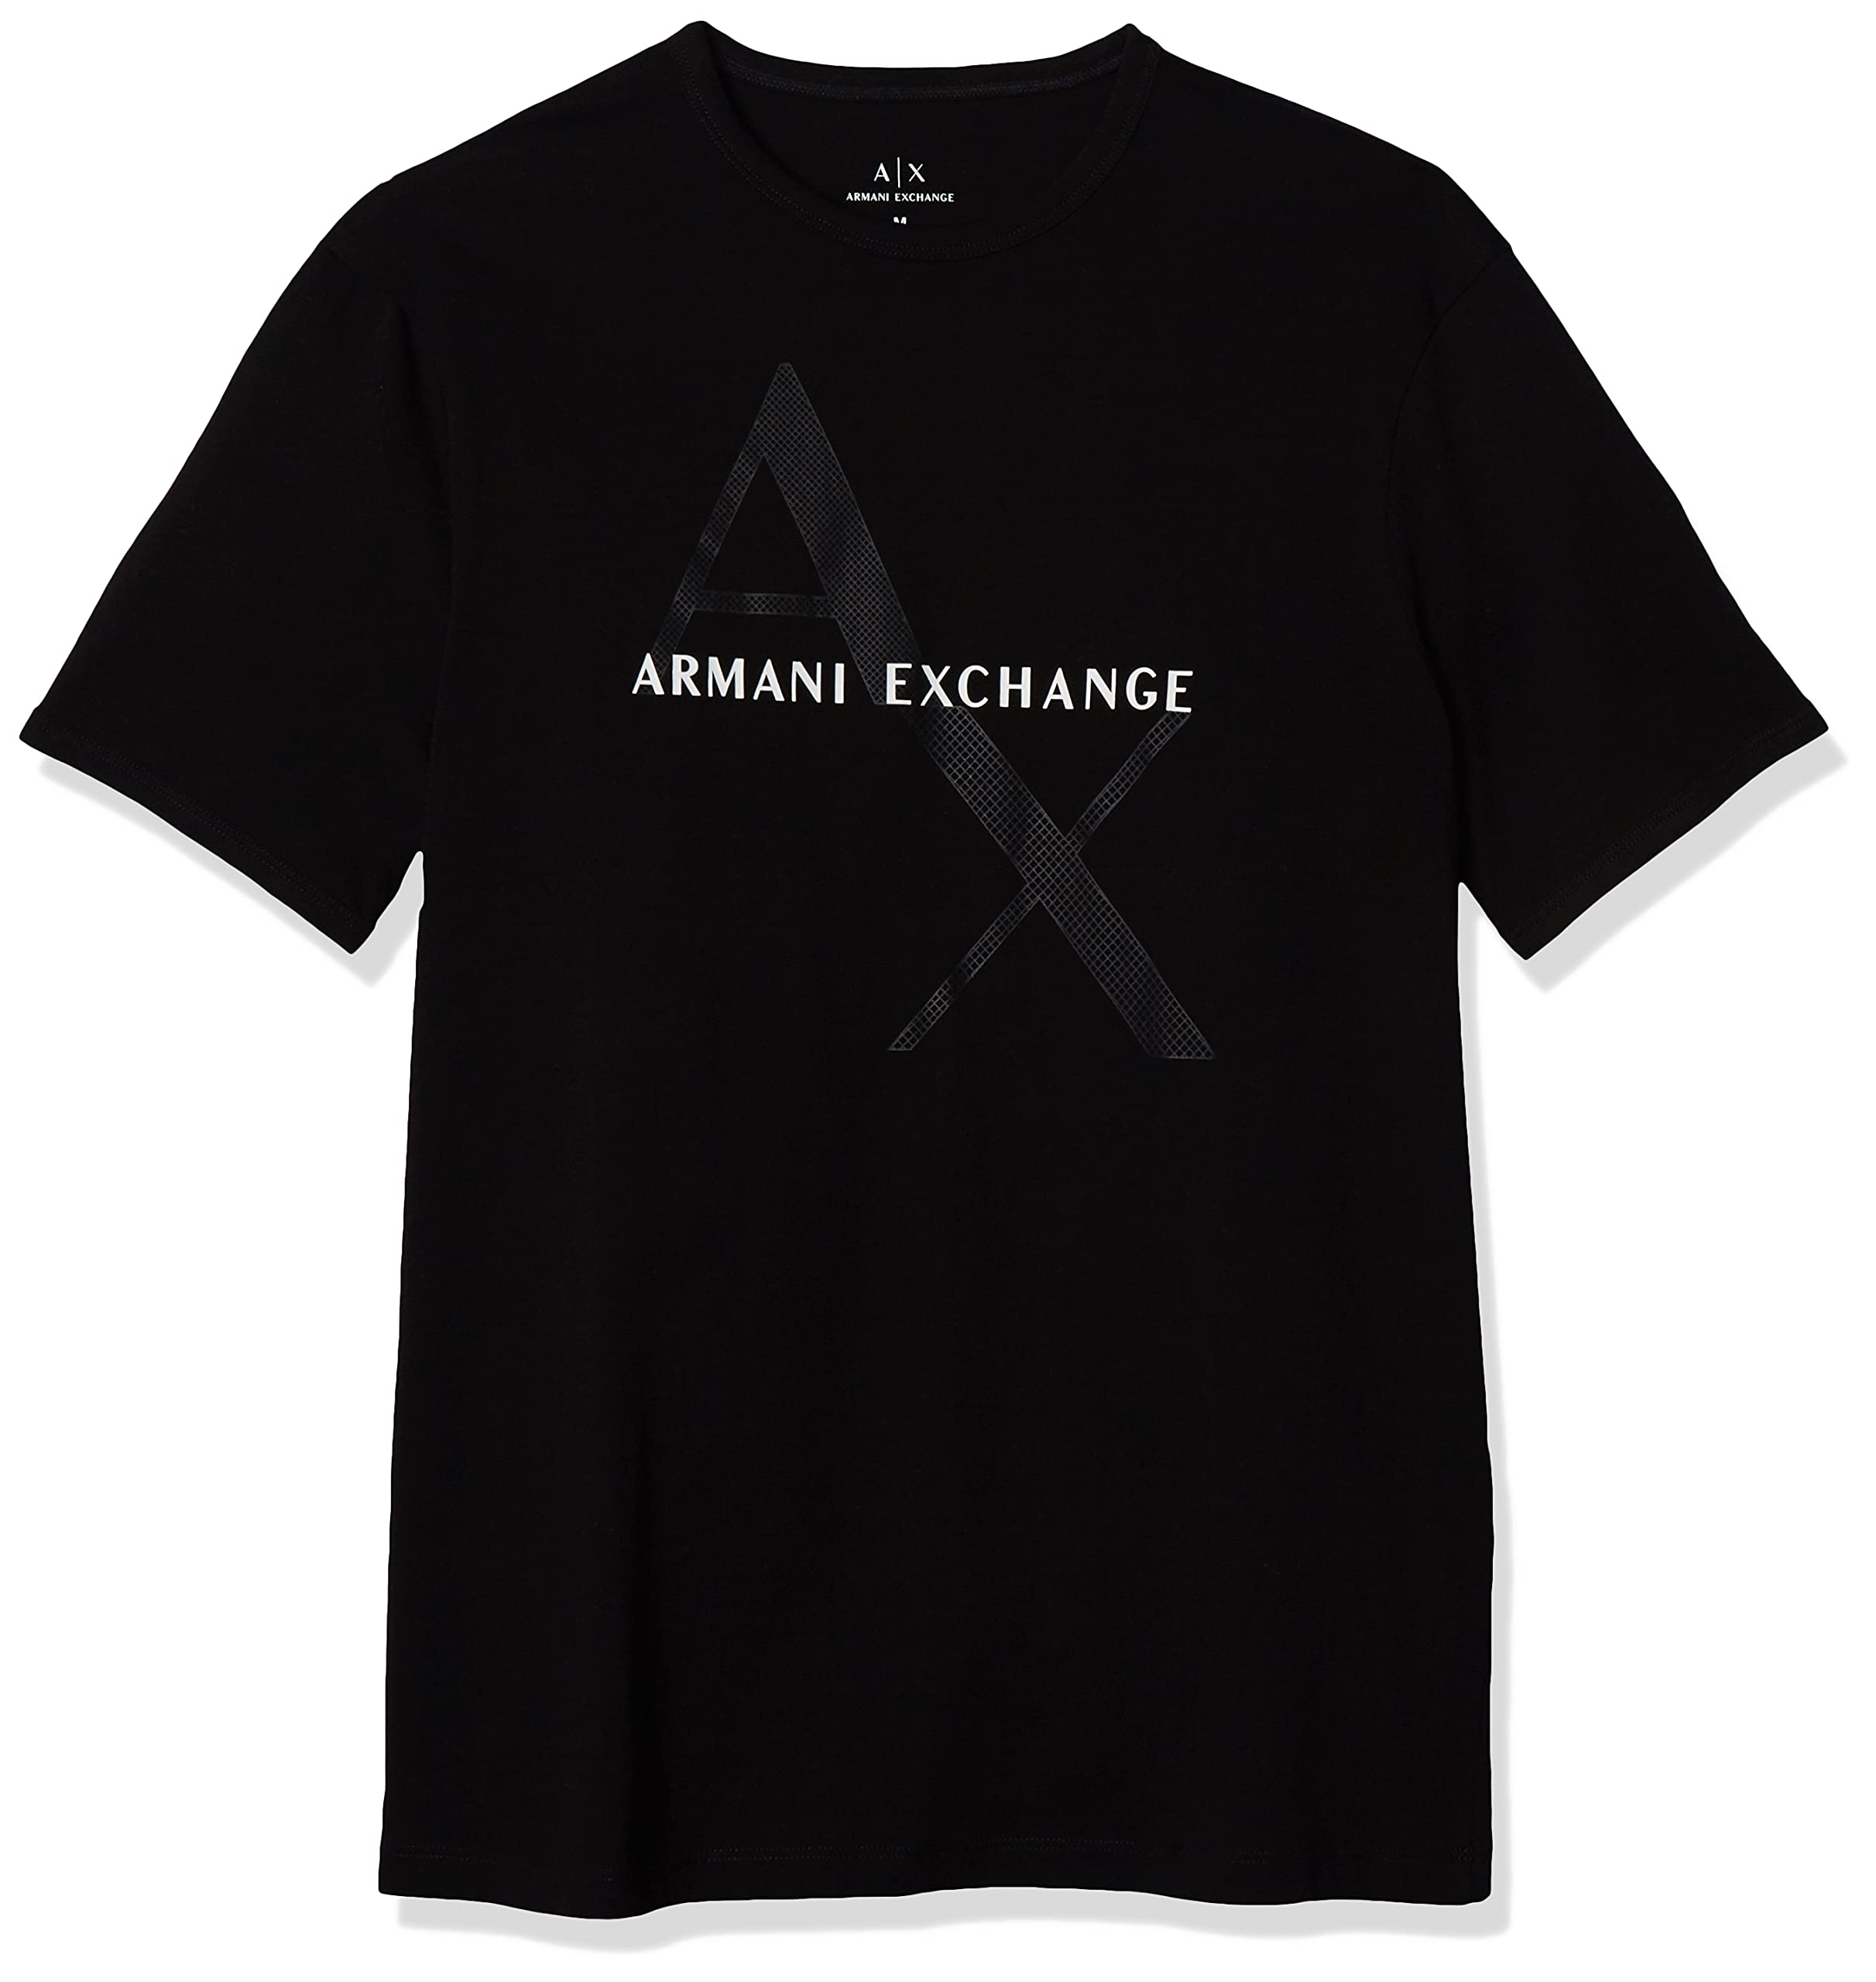 Introducir 95+ imagen amazon armani exchange t shirt